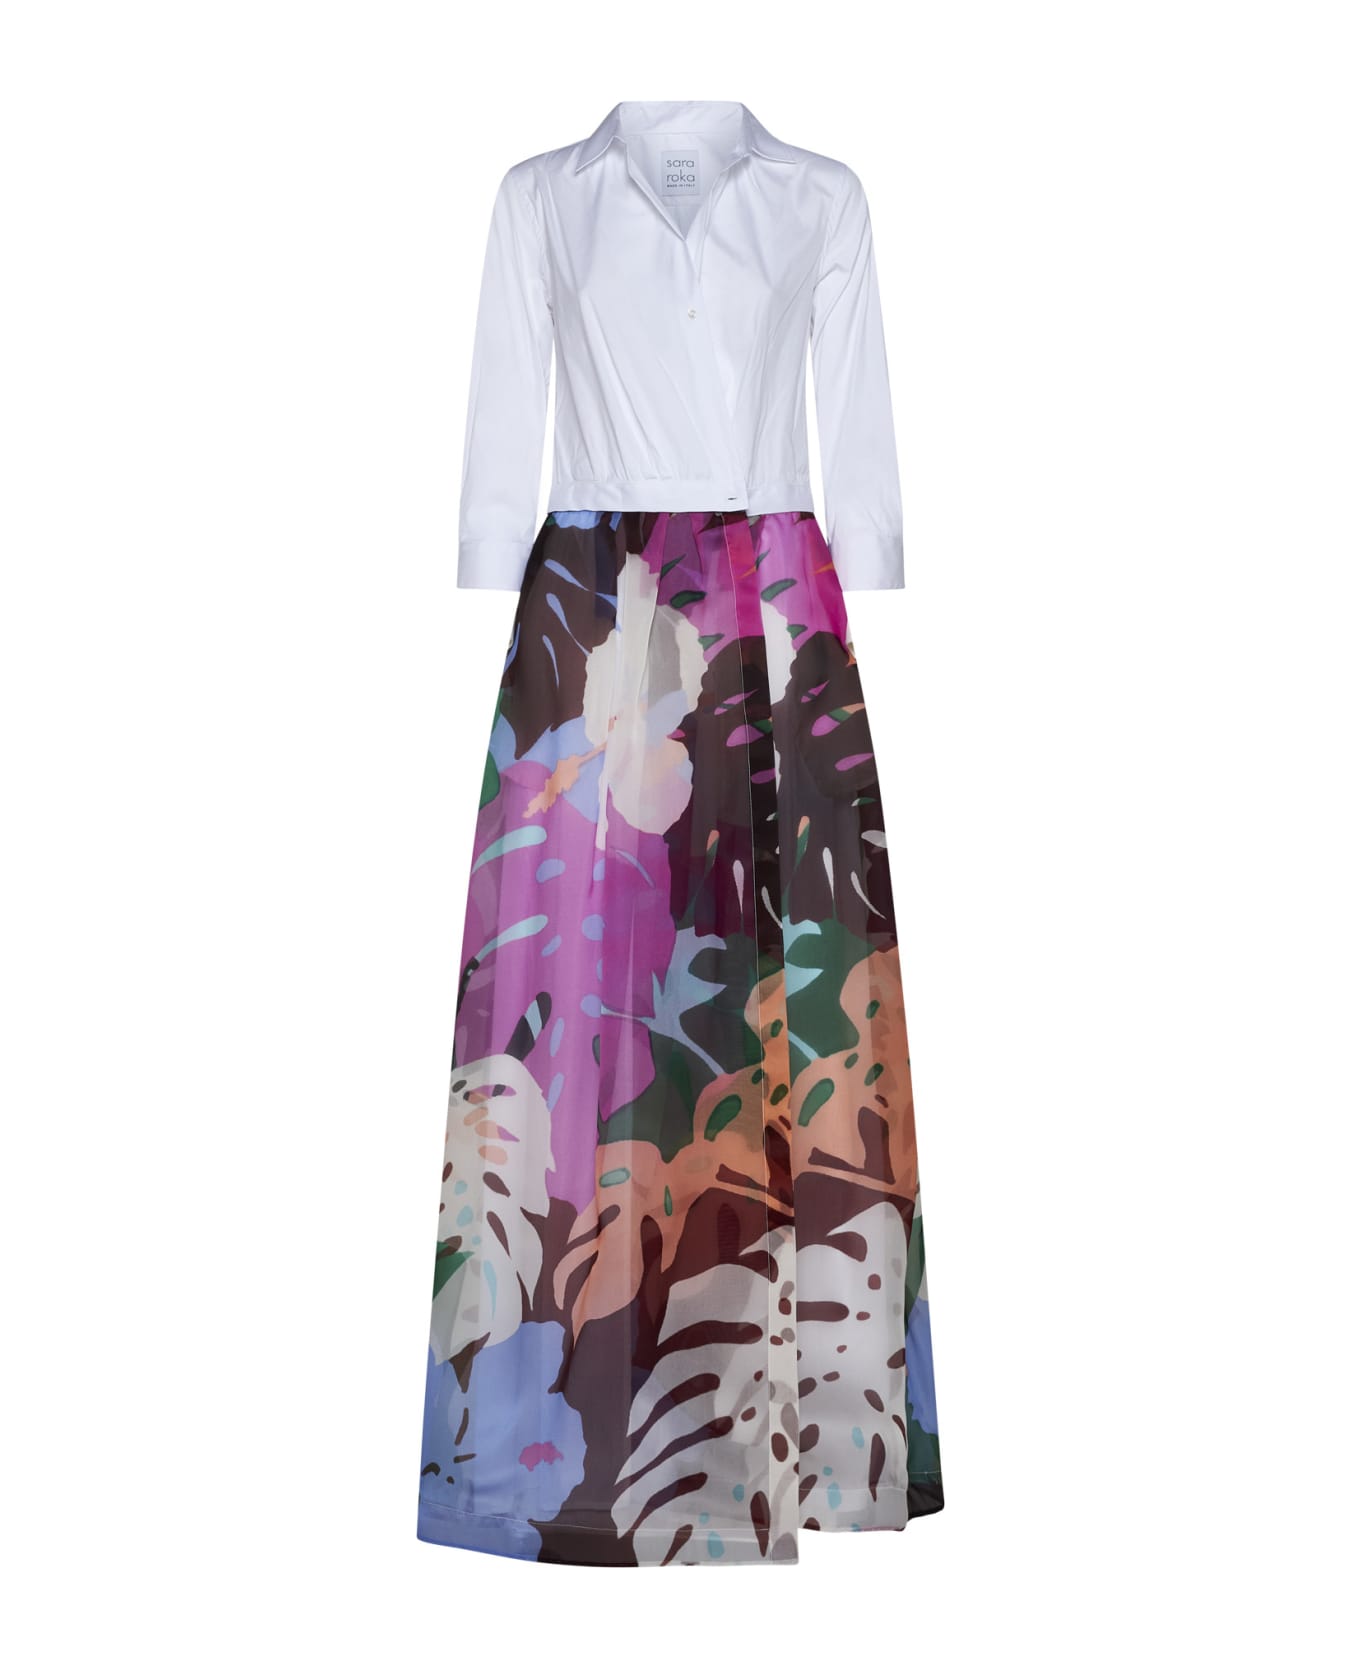 Sara Roka Dress - Bianco multicolor スカート